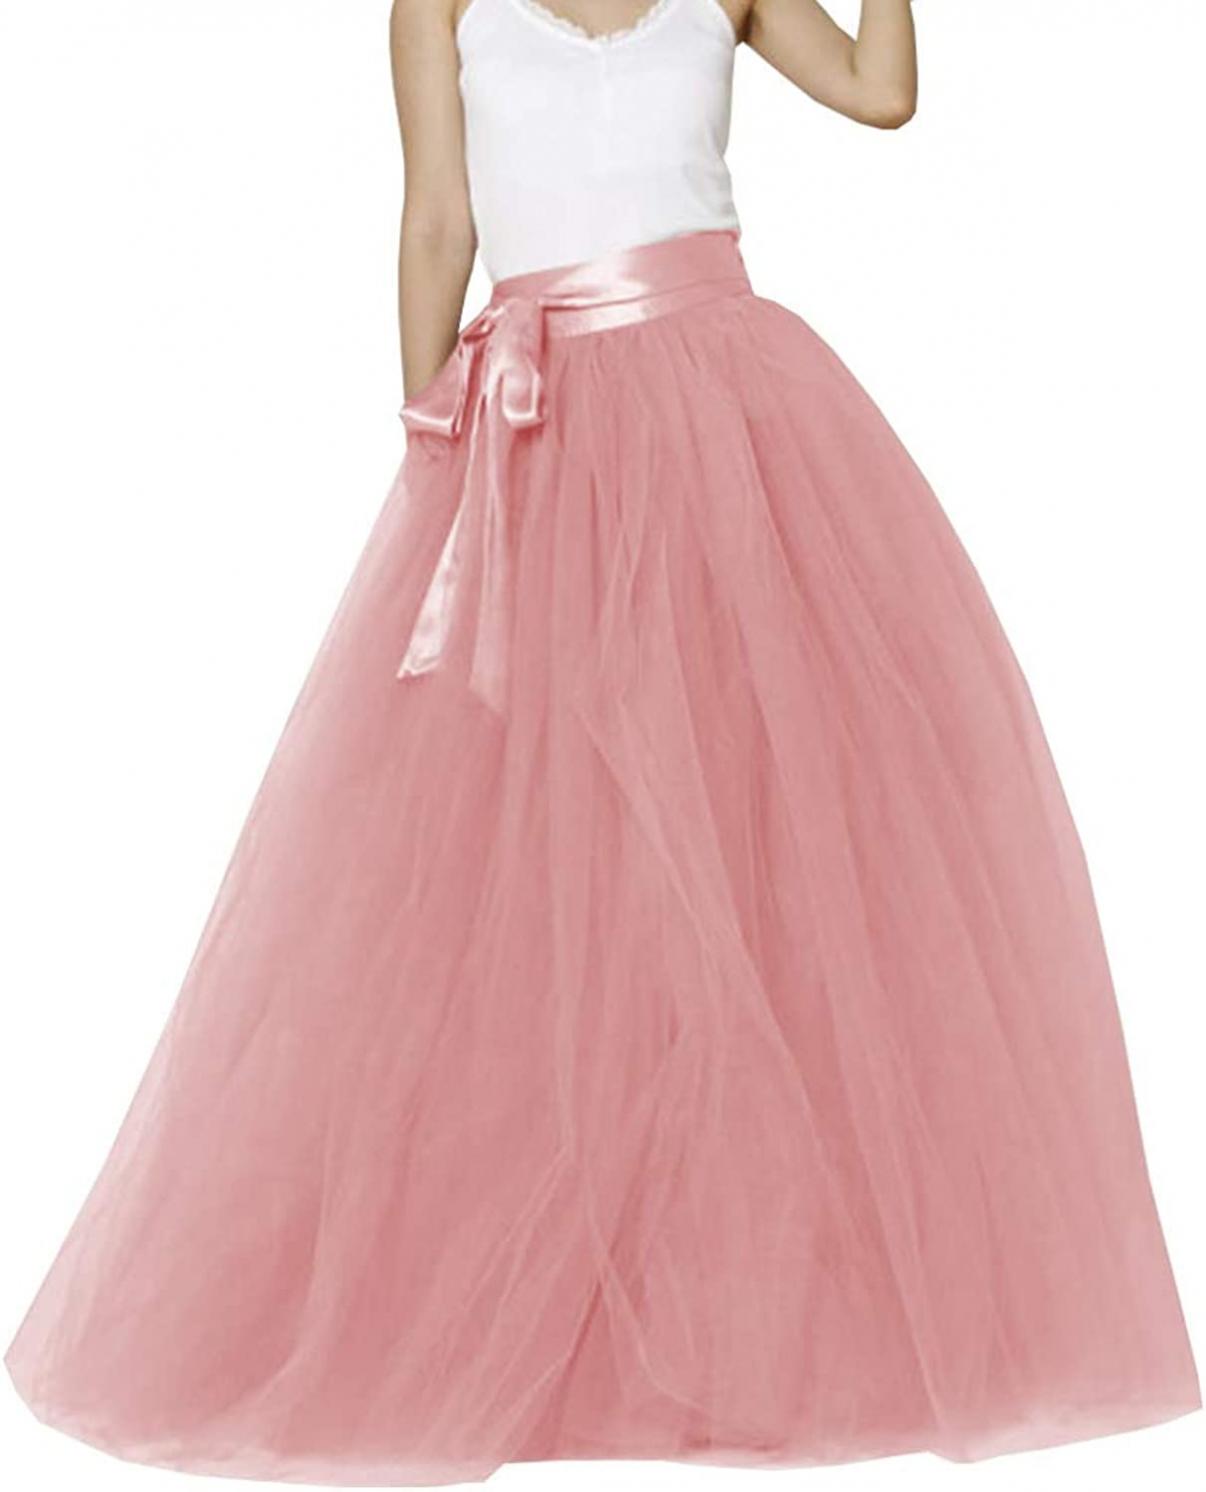 YJNXHN Women's Long Maxi A Line Tulle Skirt for Prom Evening Party Skirts Floor Length